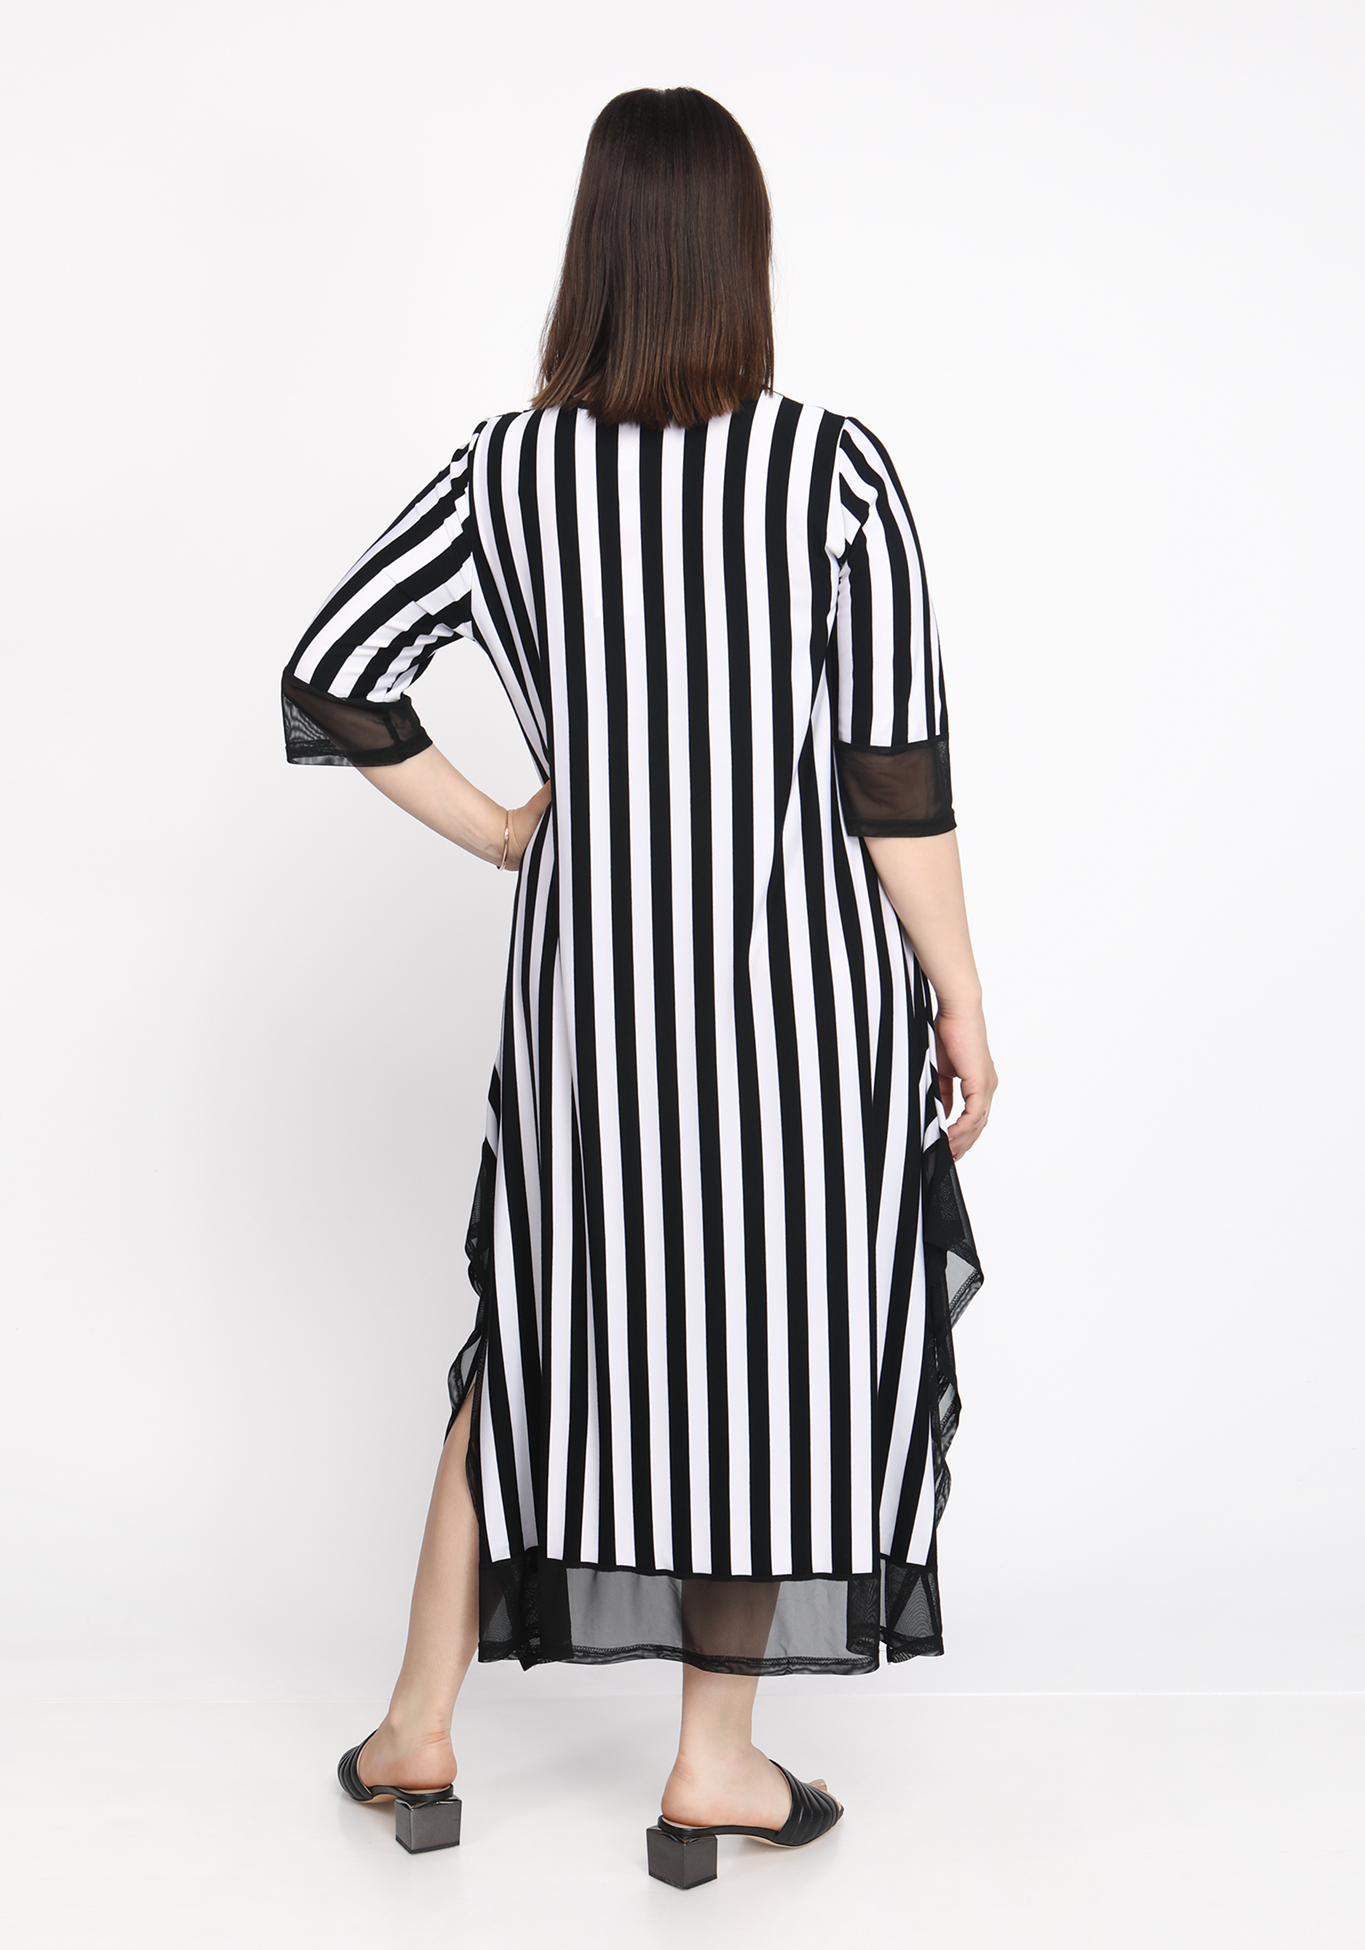 Платье "Чарующий силуэт" ZORY, размер 54, цвет черно-белый - фото 2